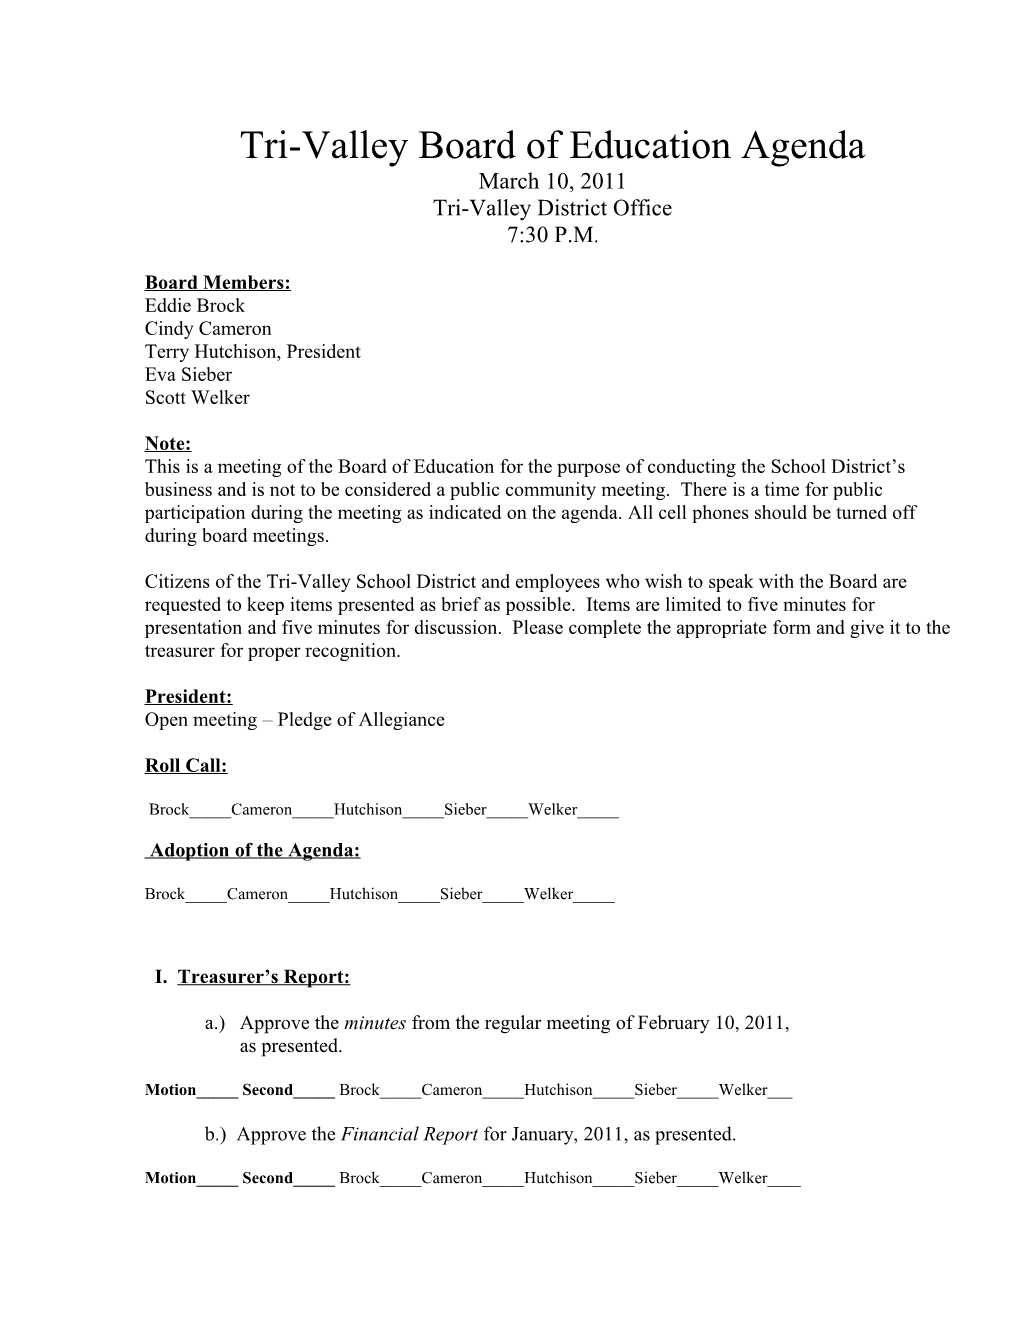 Tri-Valley Board of Education Agenda March 10, 2011